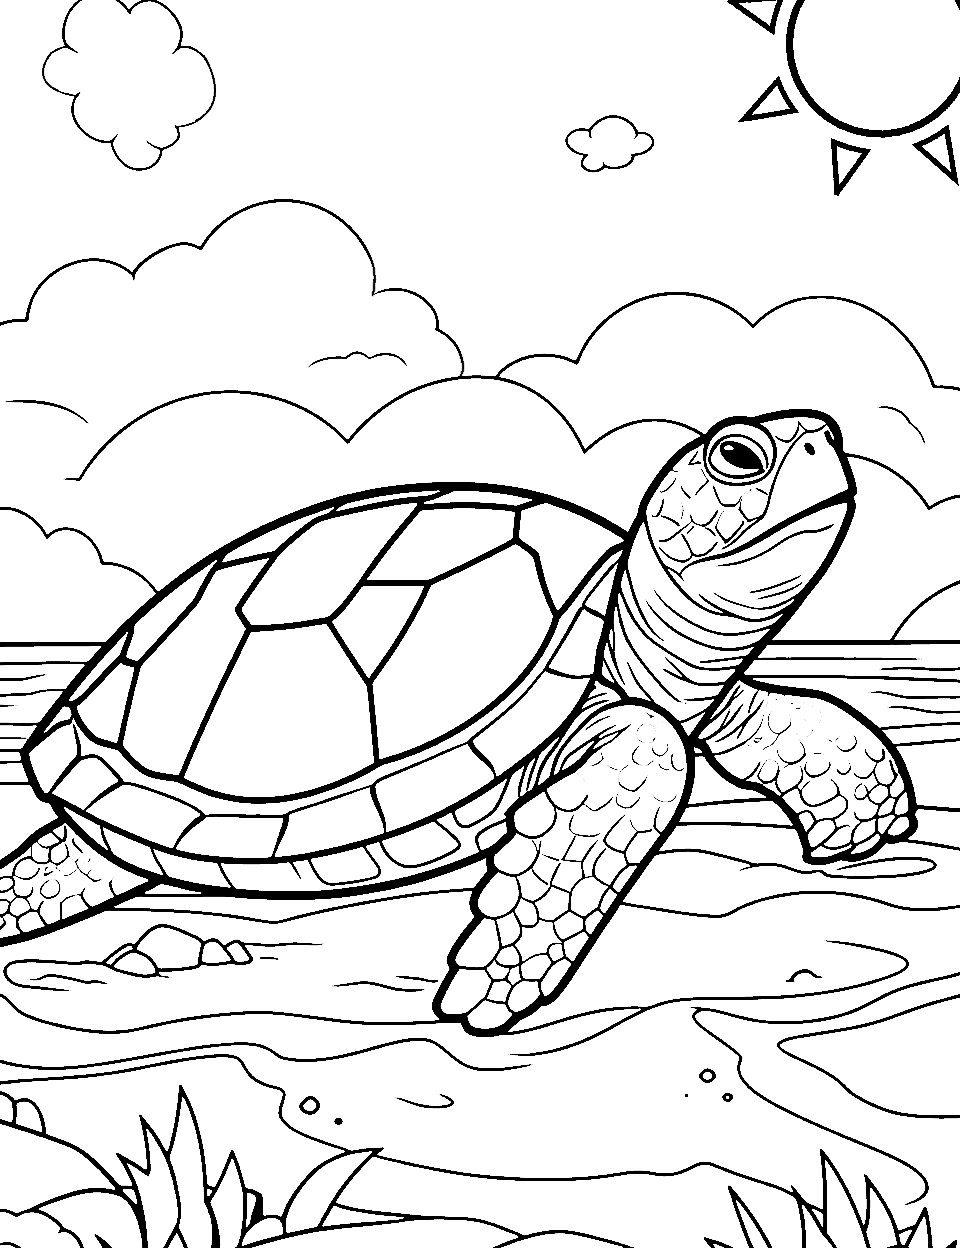 Slider Turtle's Sunbath Turtle Coloring Page - A slider turtle soaking up the sun.